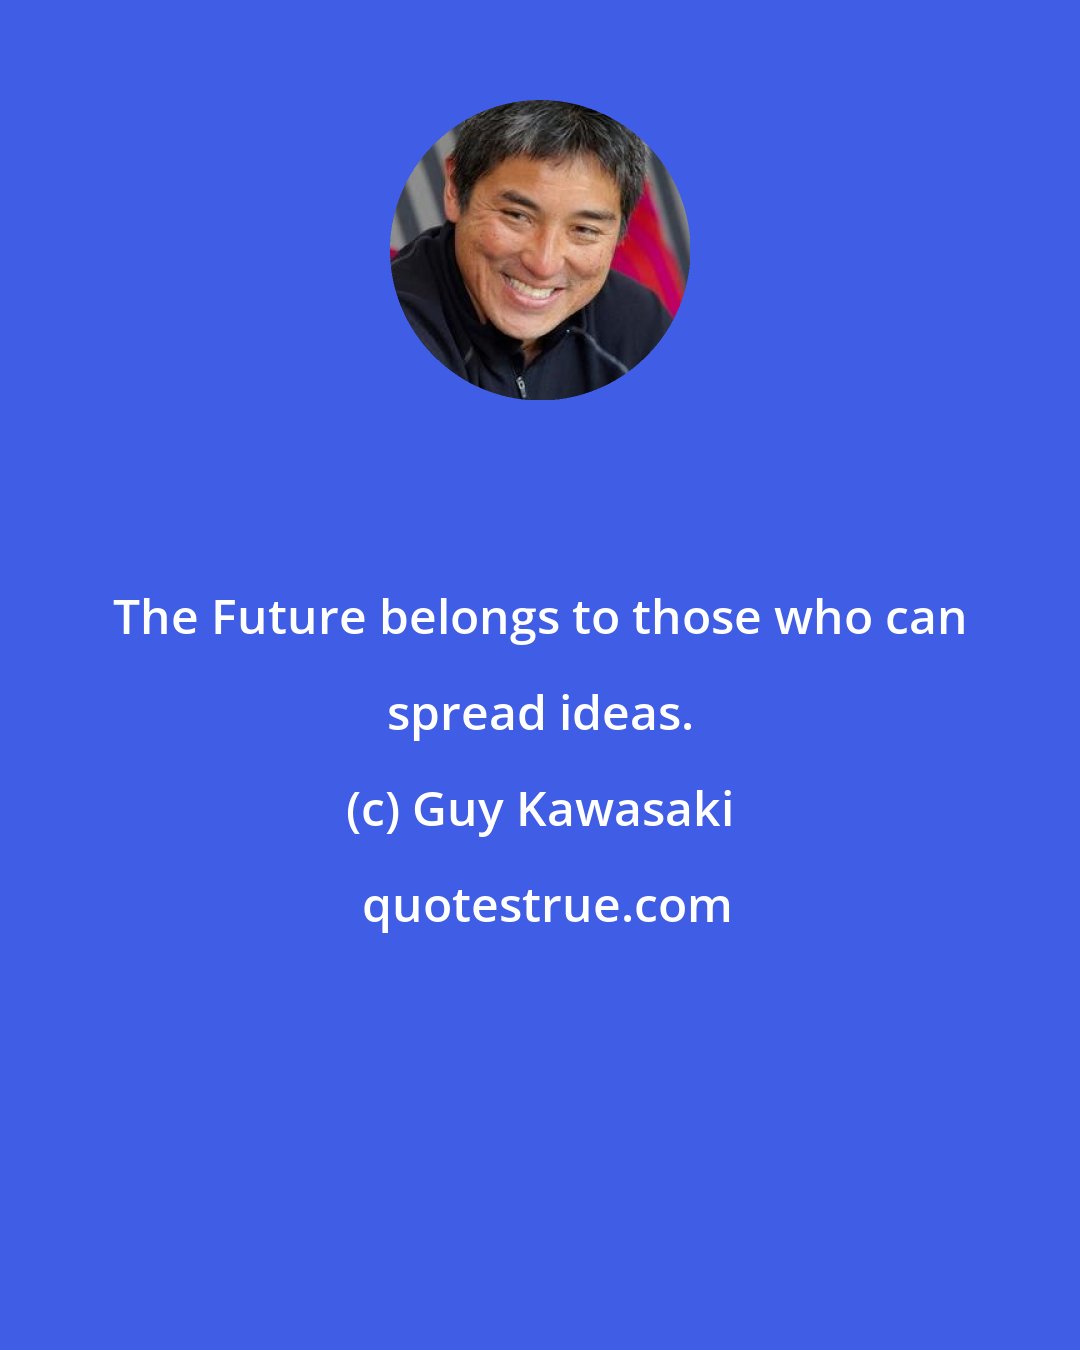 Guy Kawasaki: The Future belongs to those who can spread ideas.